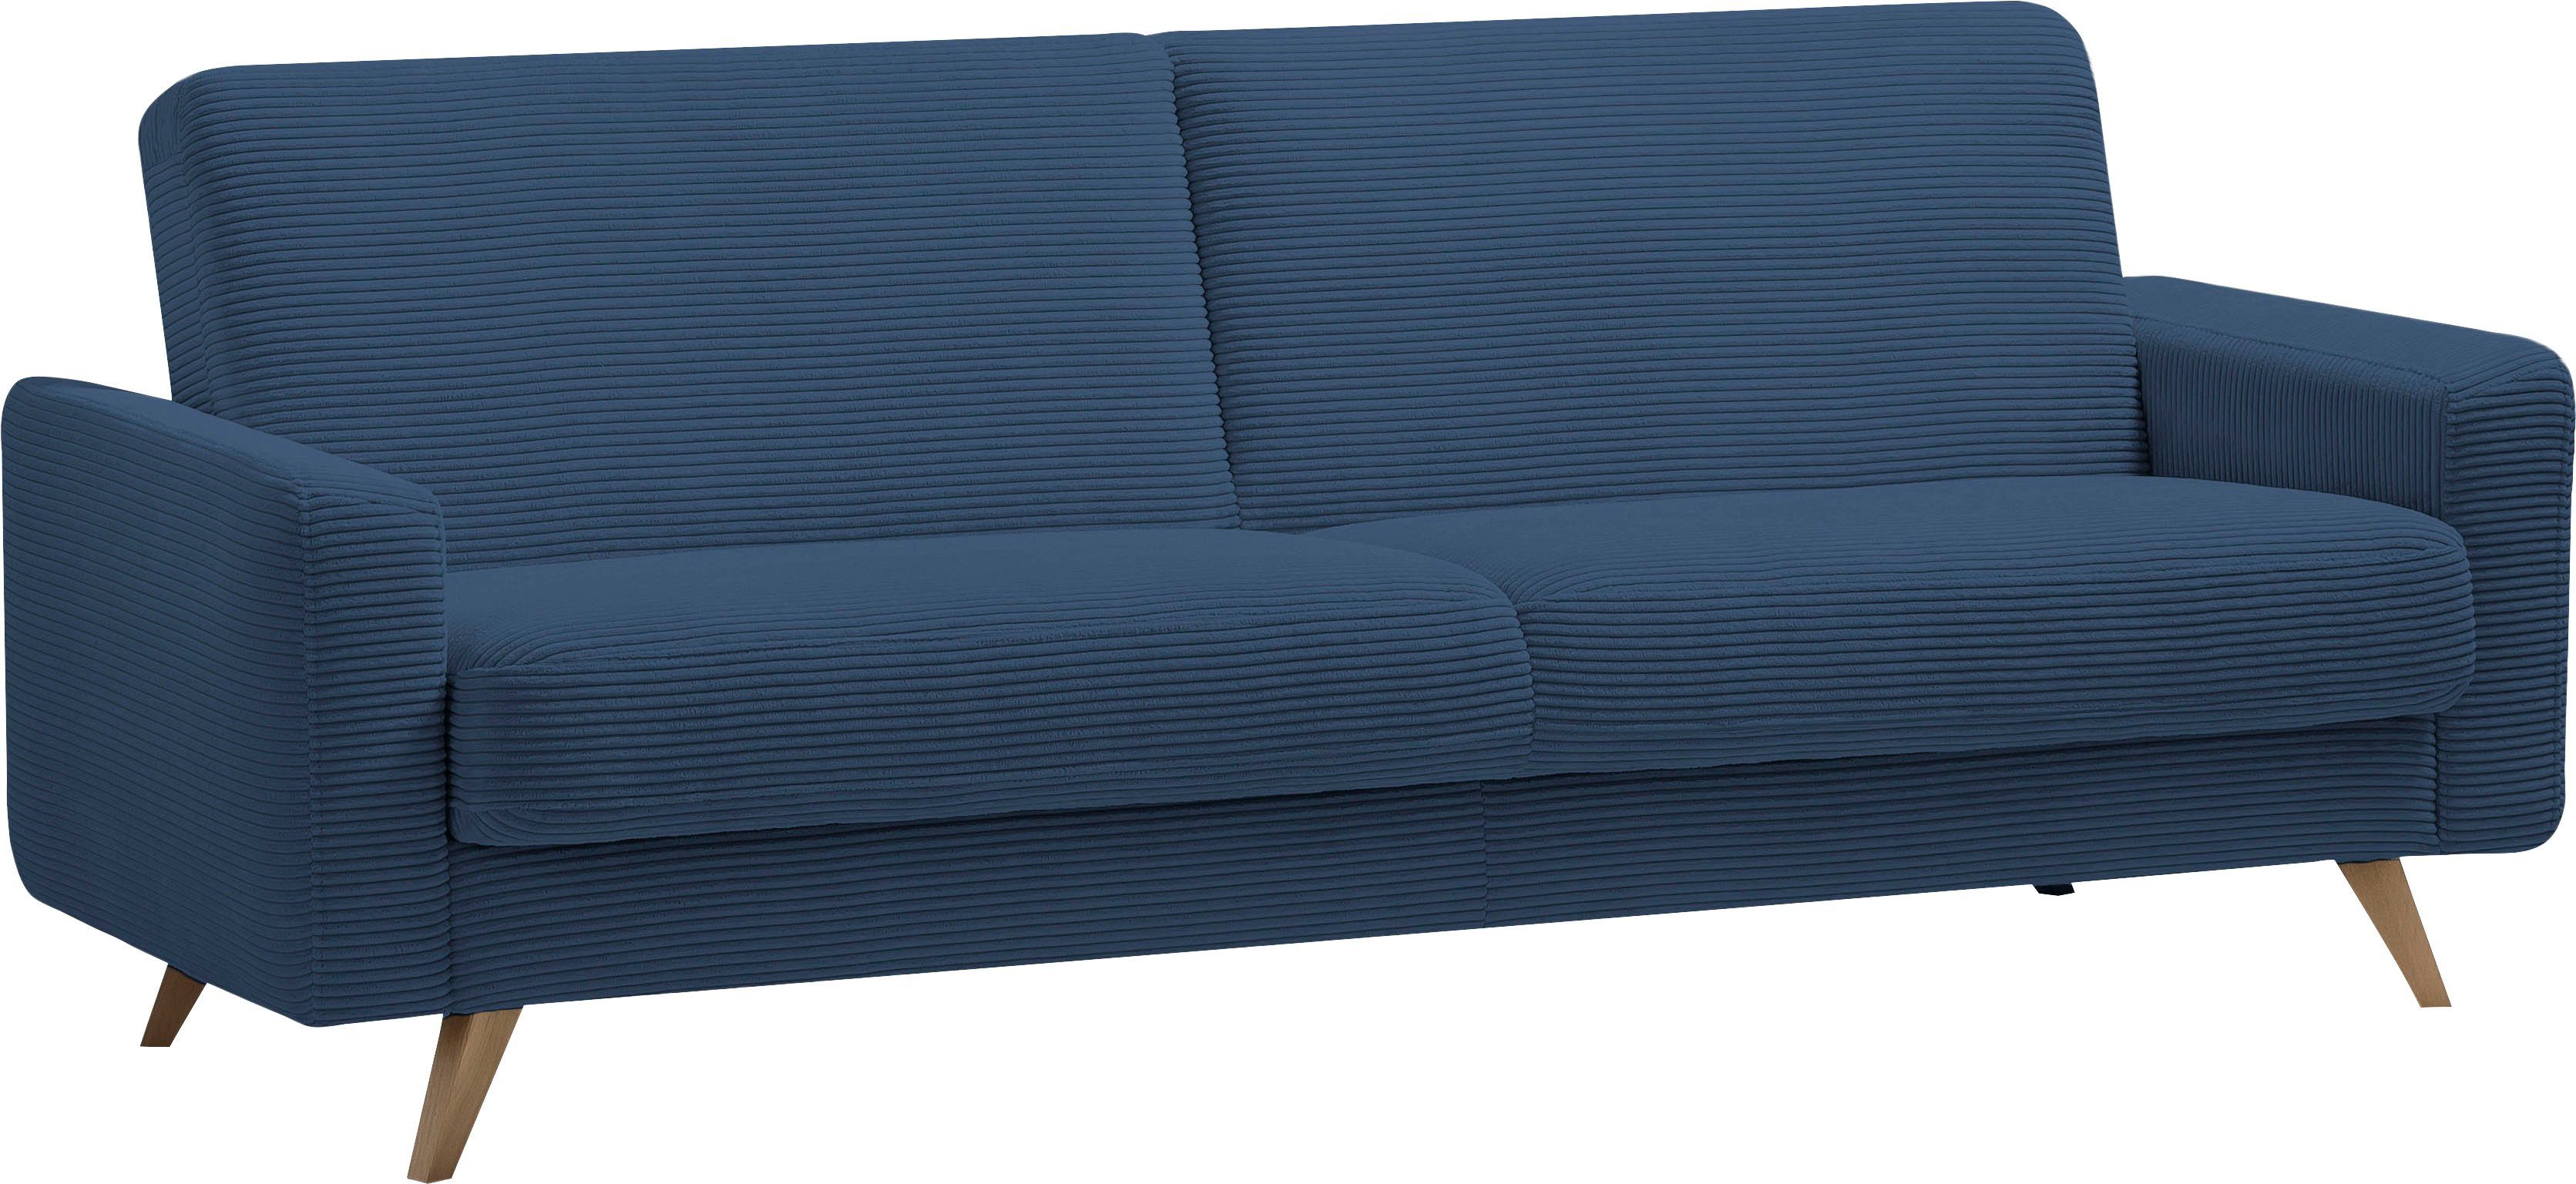 exxpo - 3-Sitzer fashion Samso, Inklusive Bettkasten und sofa Bettfunktion navy